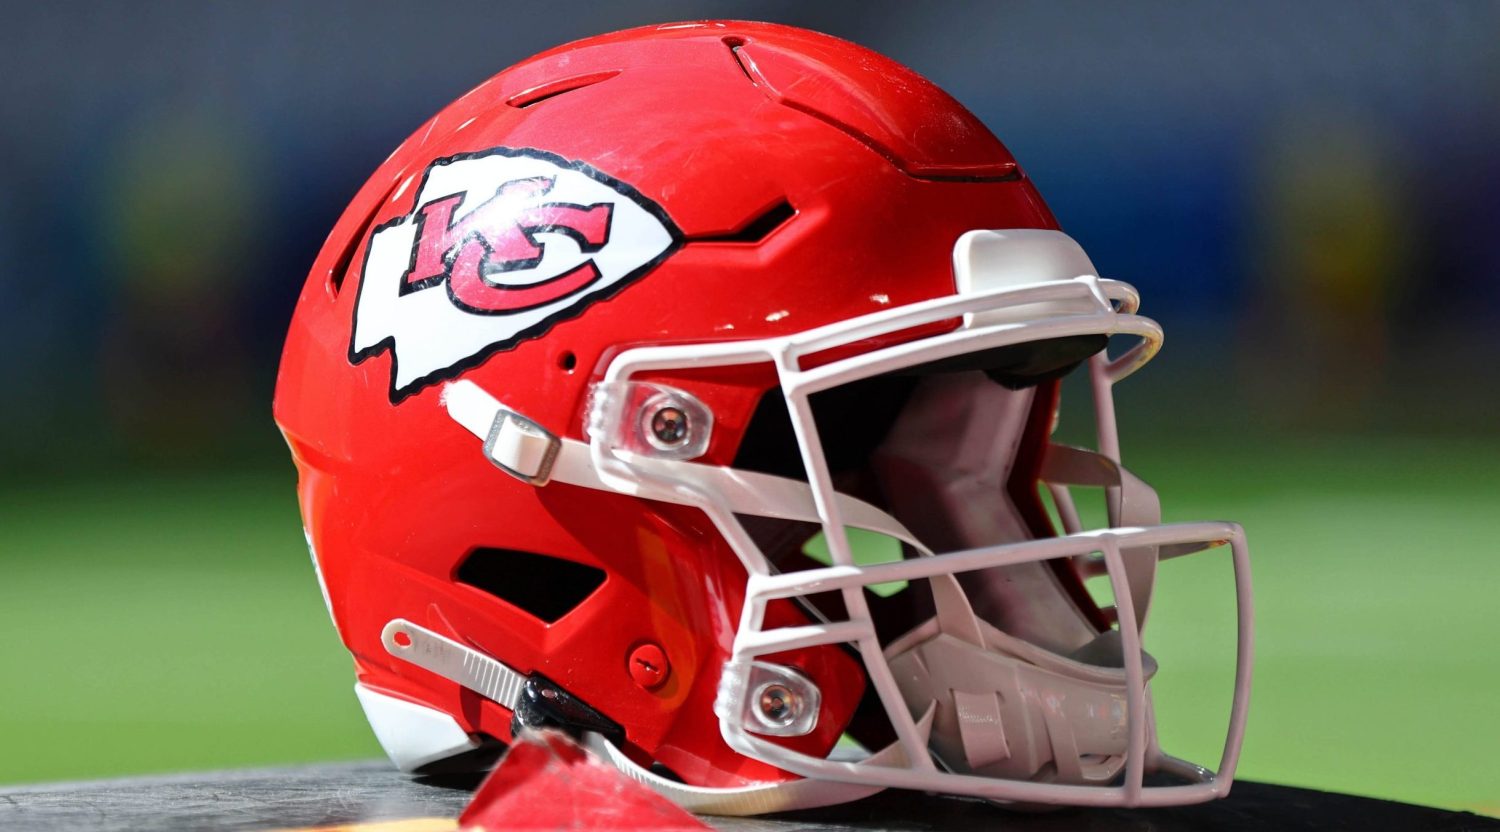 Feb 12, 2023; Glendale, Arizona, US; A detail view of a Kansas City Chiefs helmet before Super Bowl LVII at State Farm Stadium. Mandatory Credit: Mark J. Rebilas-USA TODAY Sports